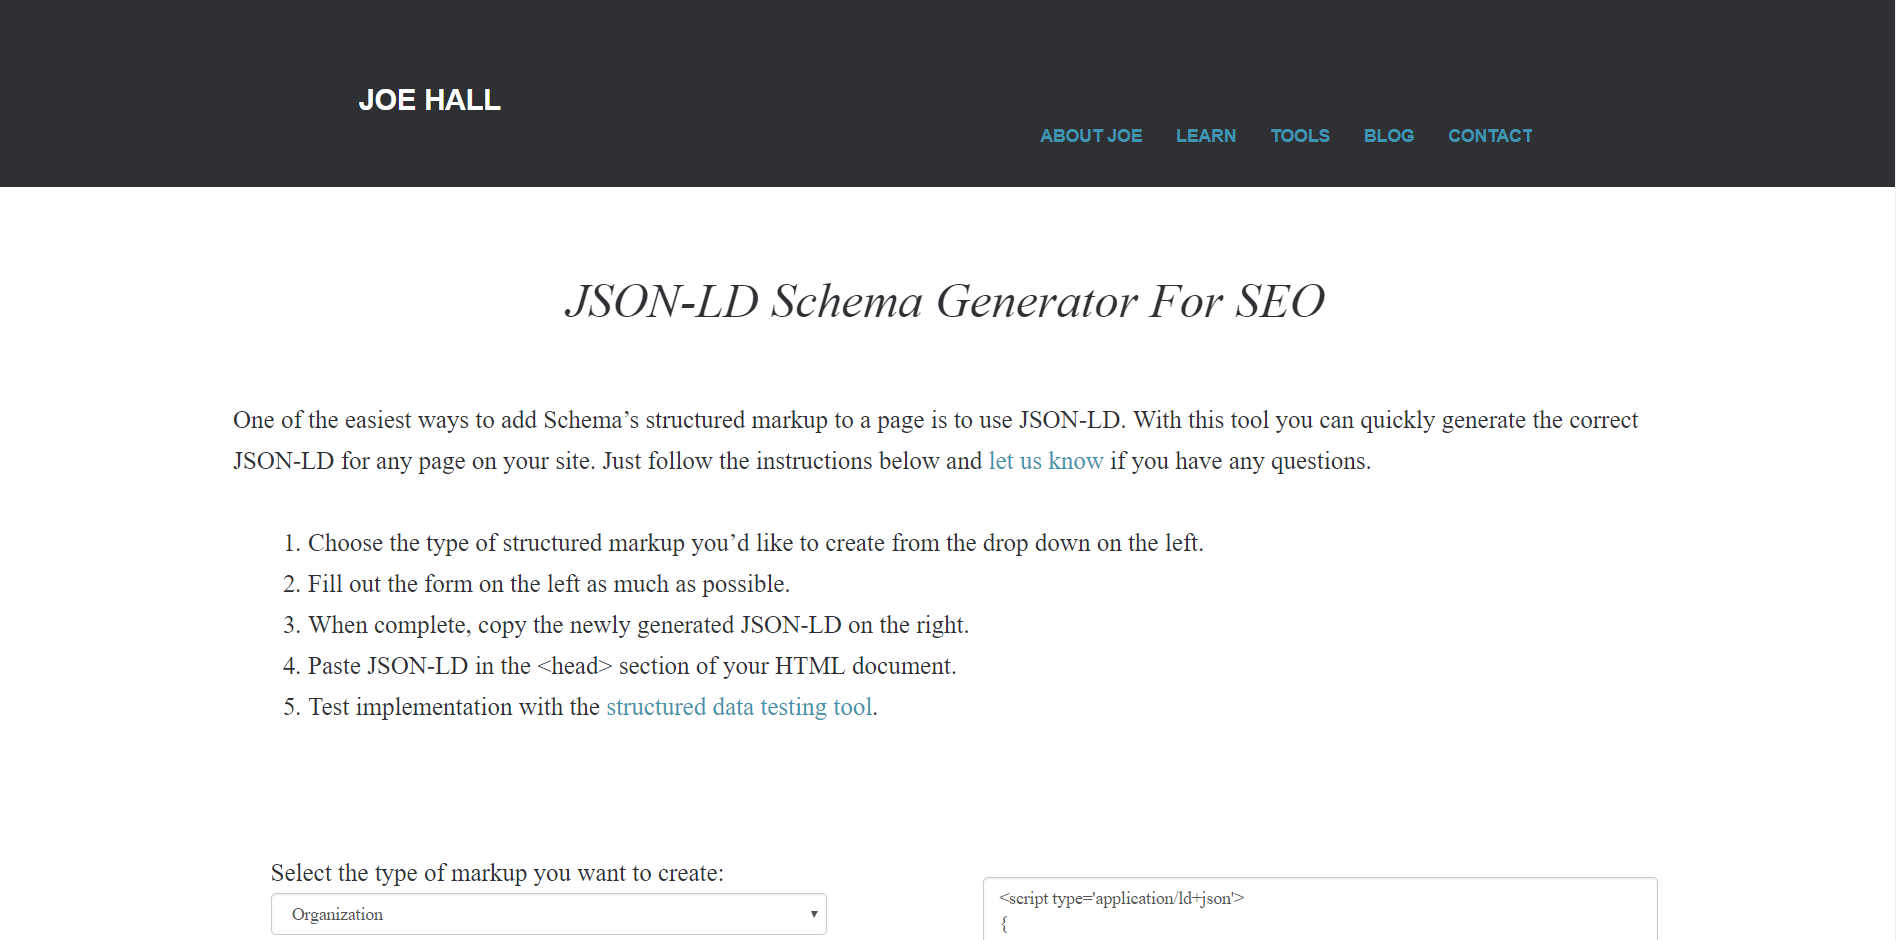 Joe Hall’s JSON-LD Schema Generator For SEO